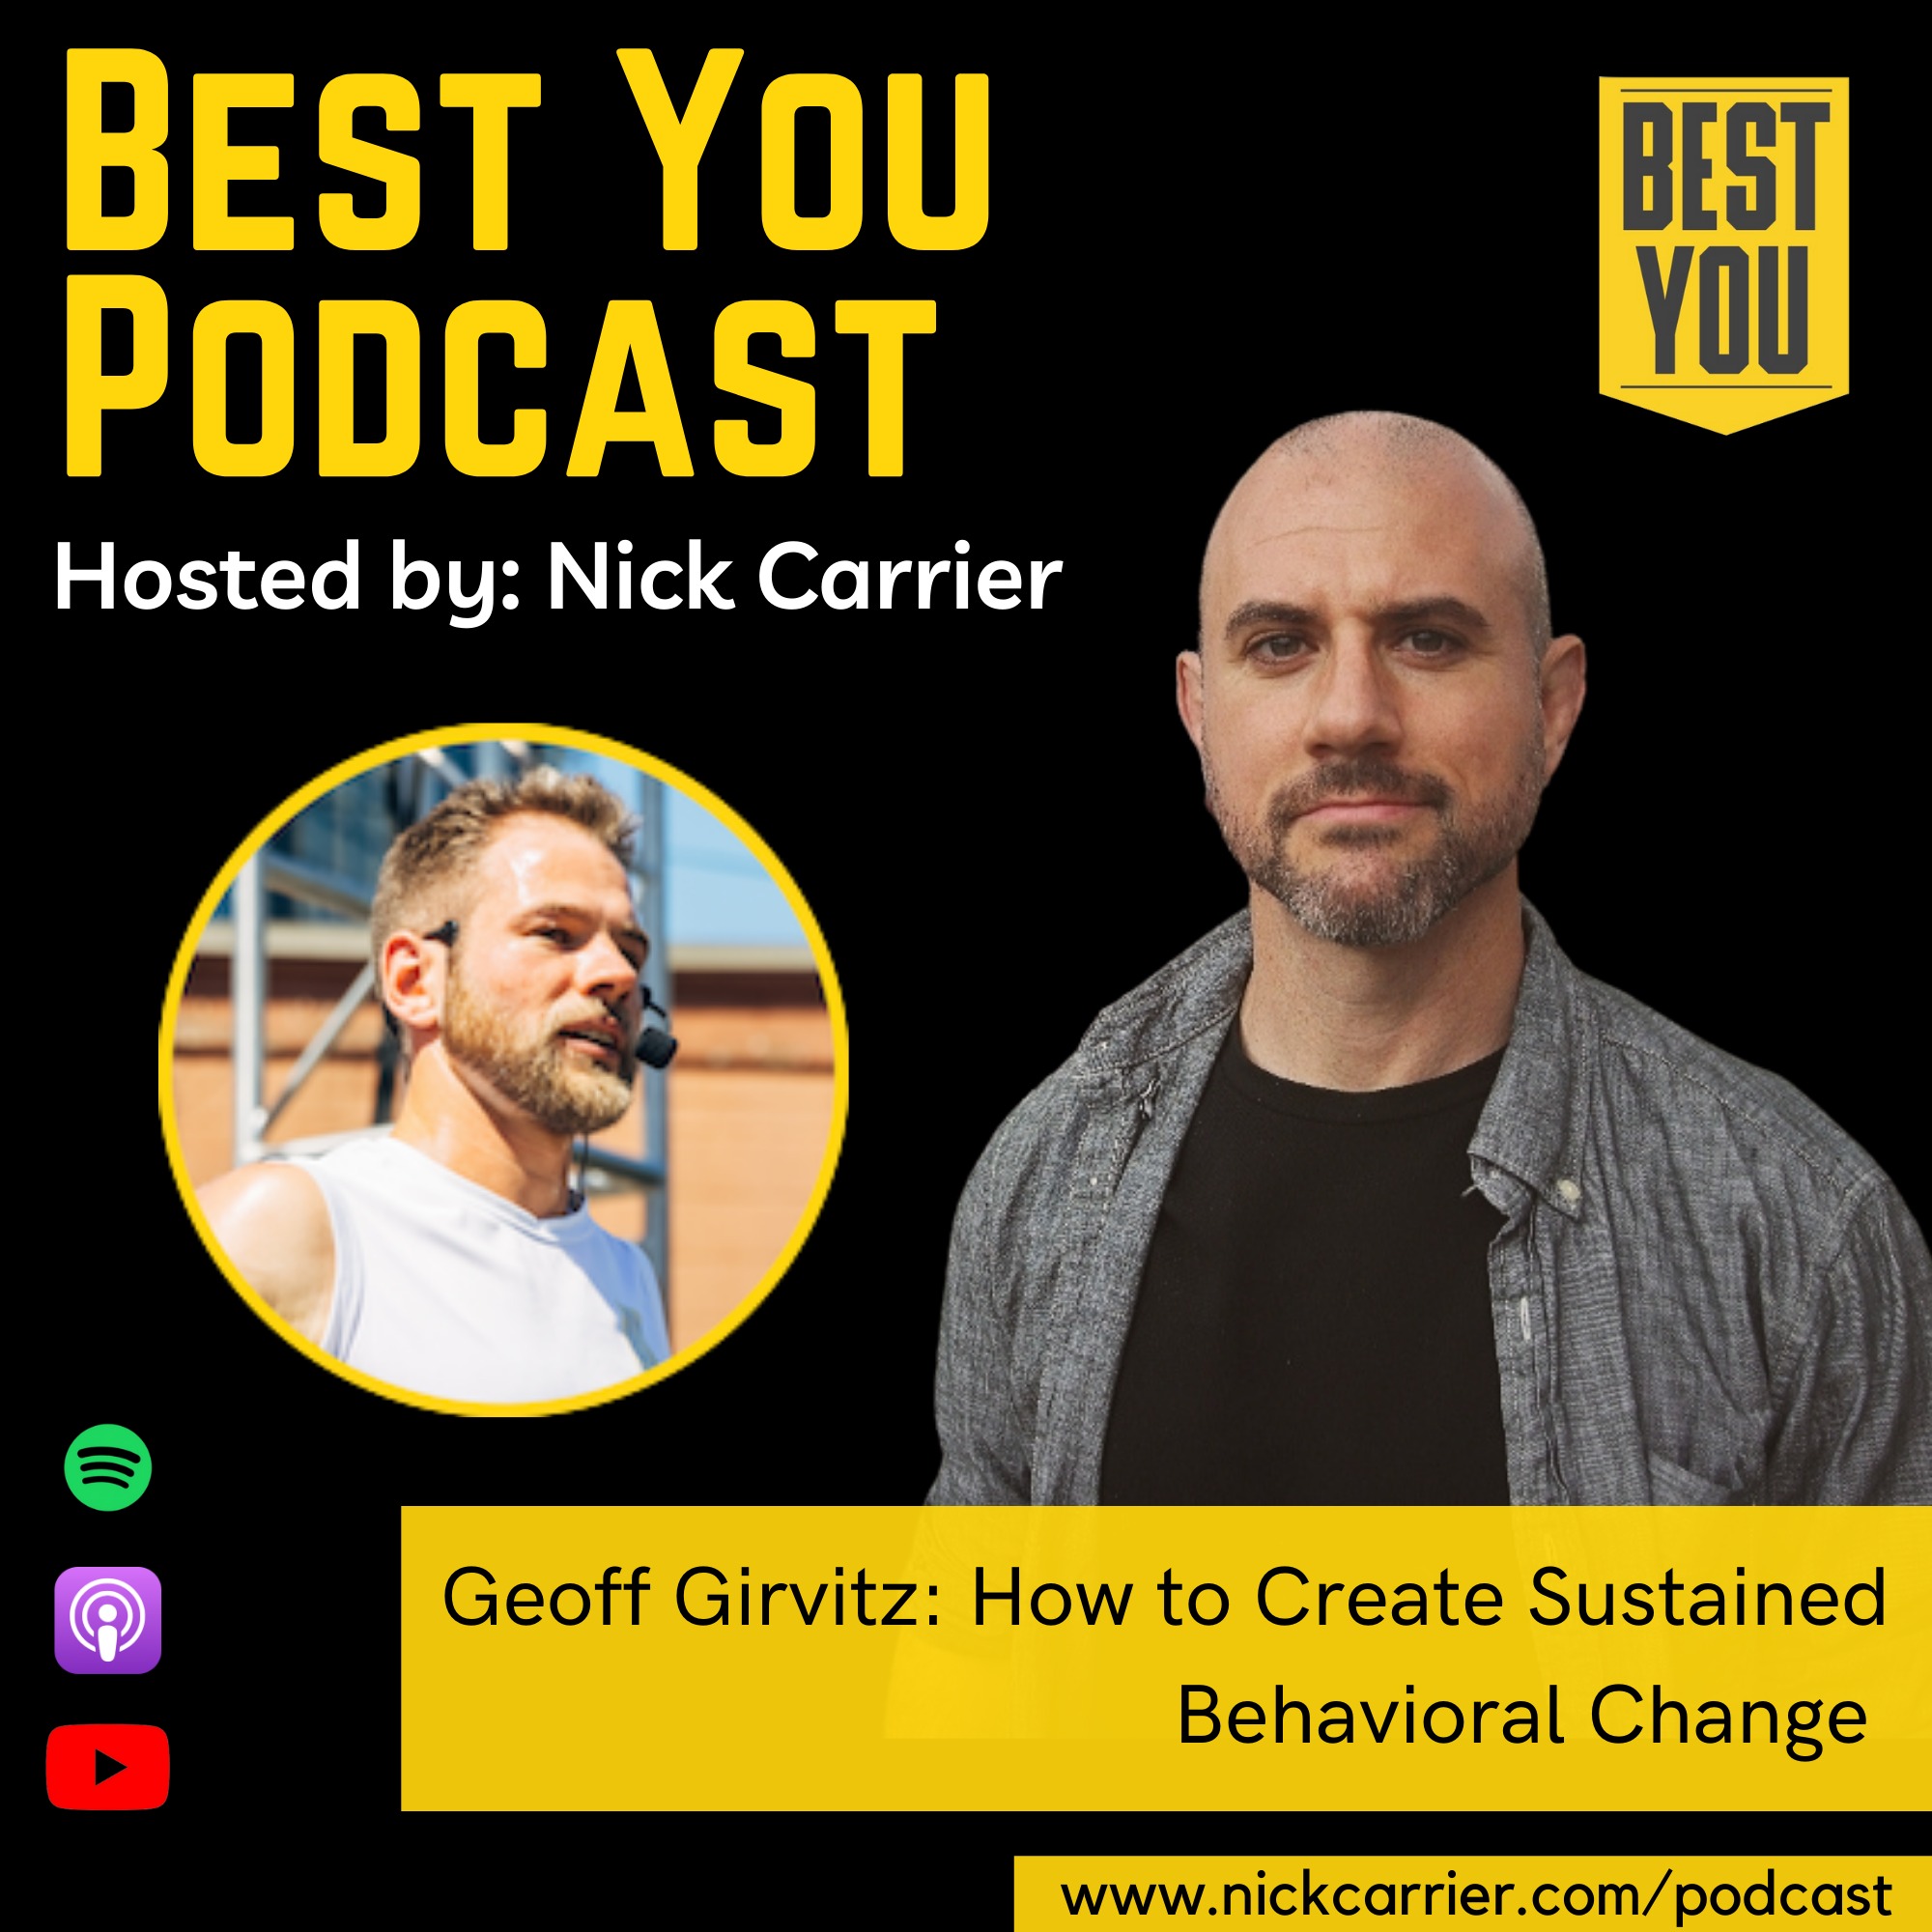 Geoff Girvitz - How to Create Sustained Behavioral Change